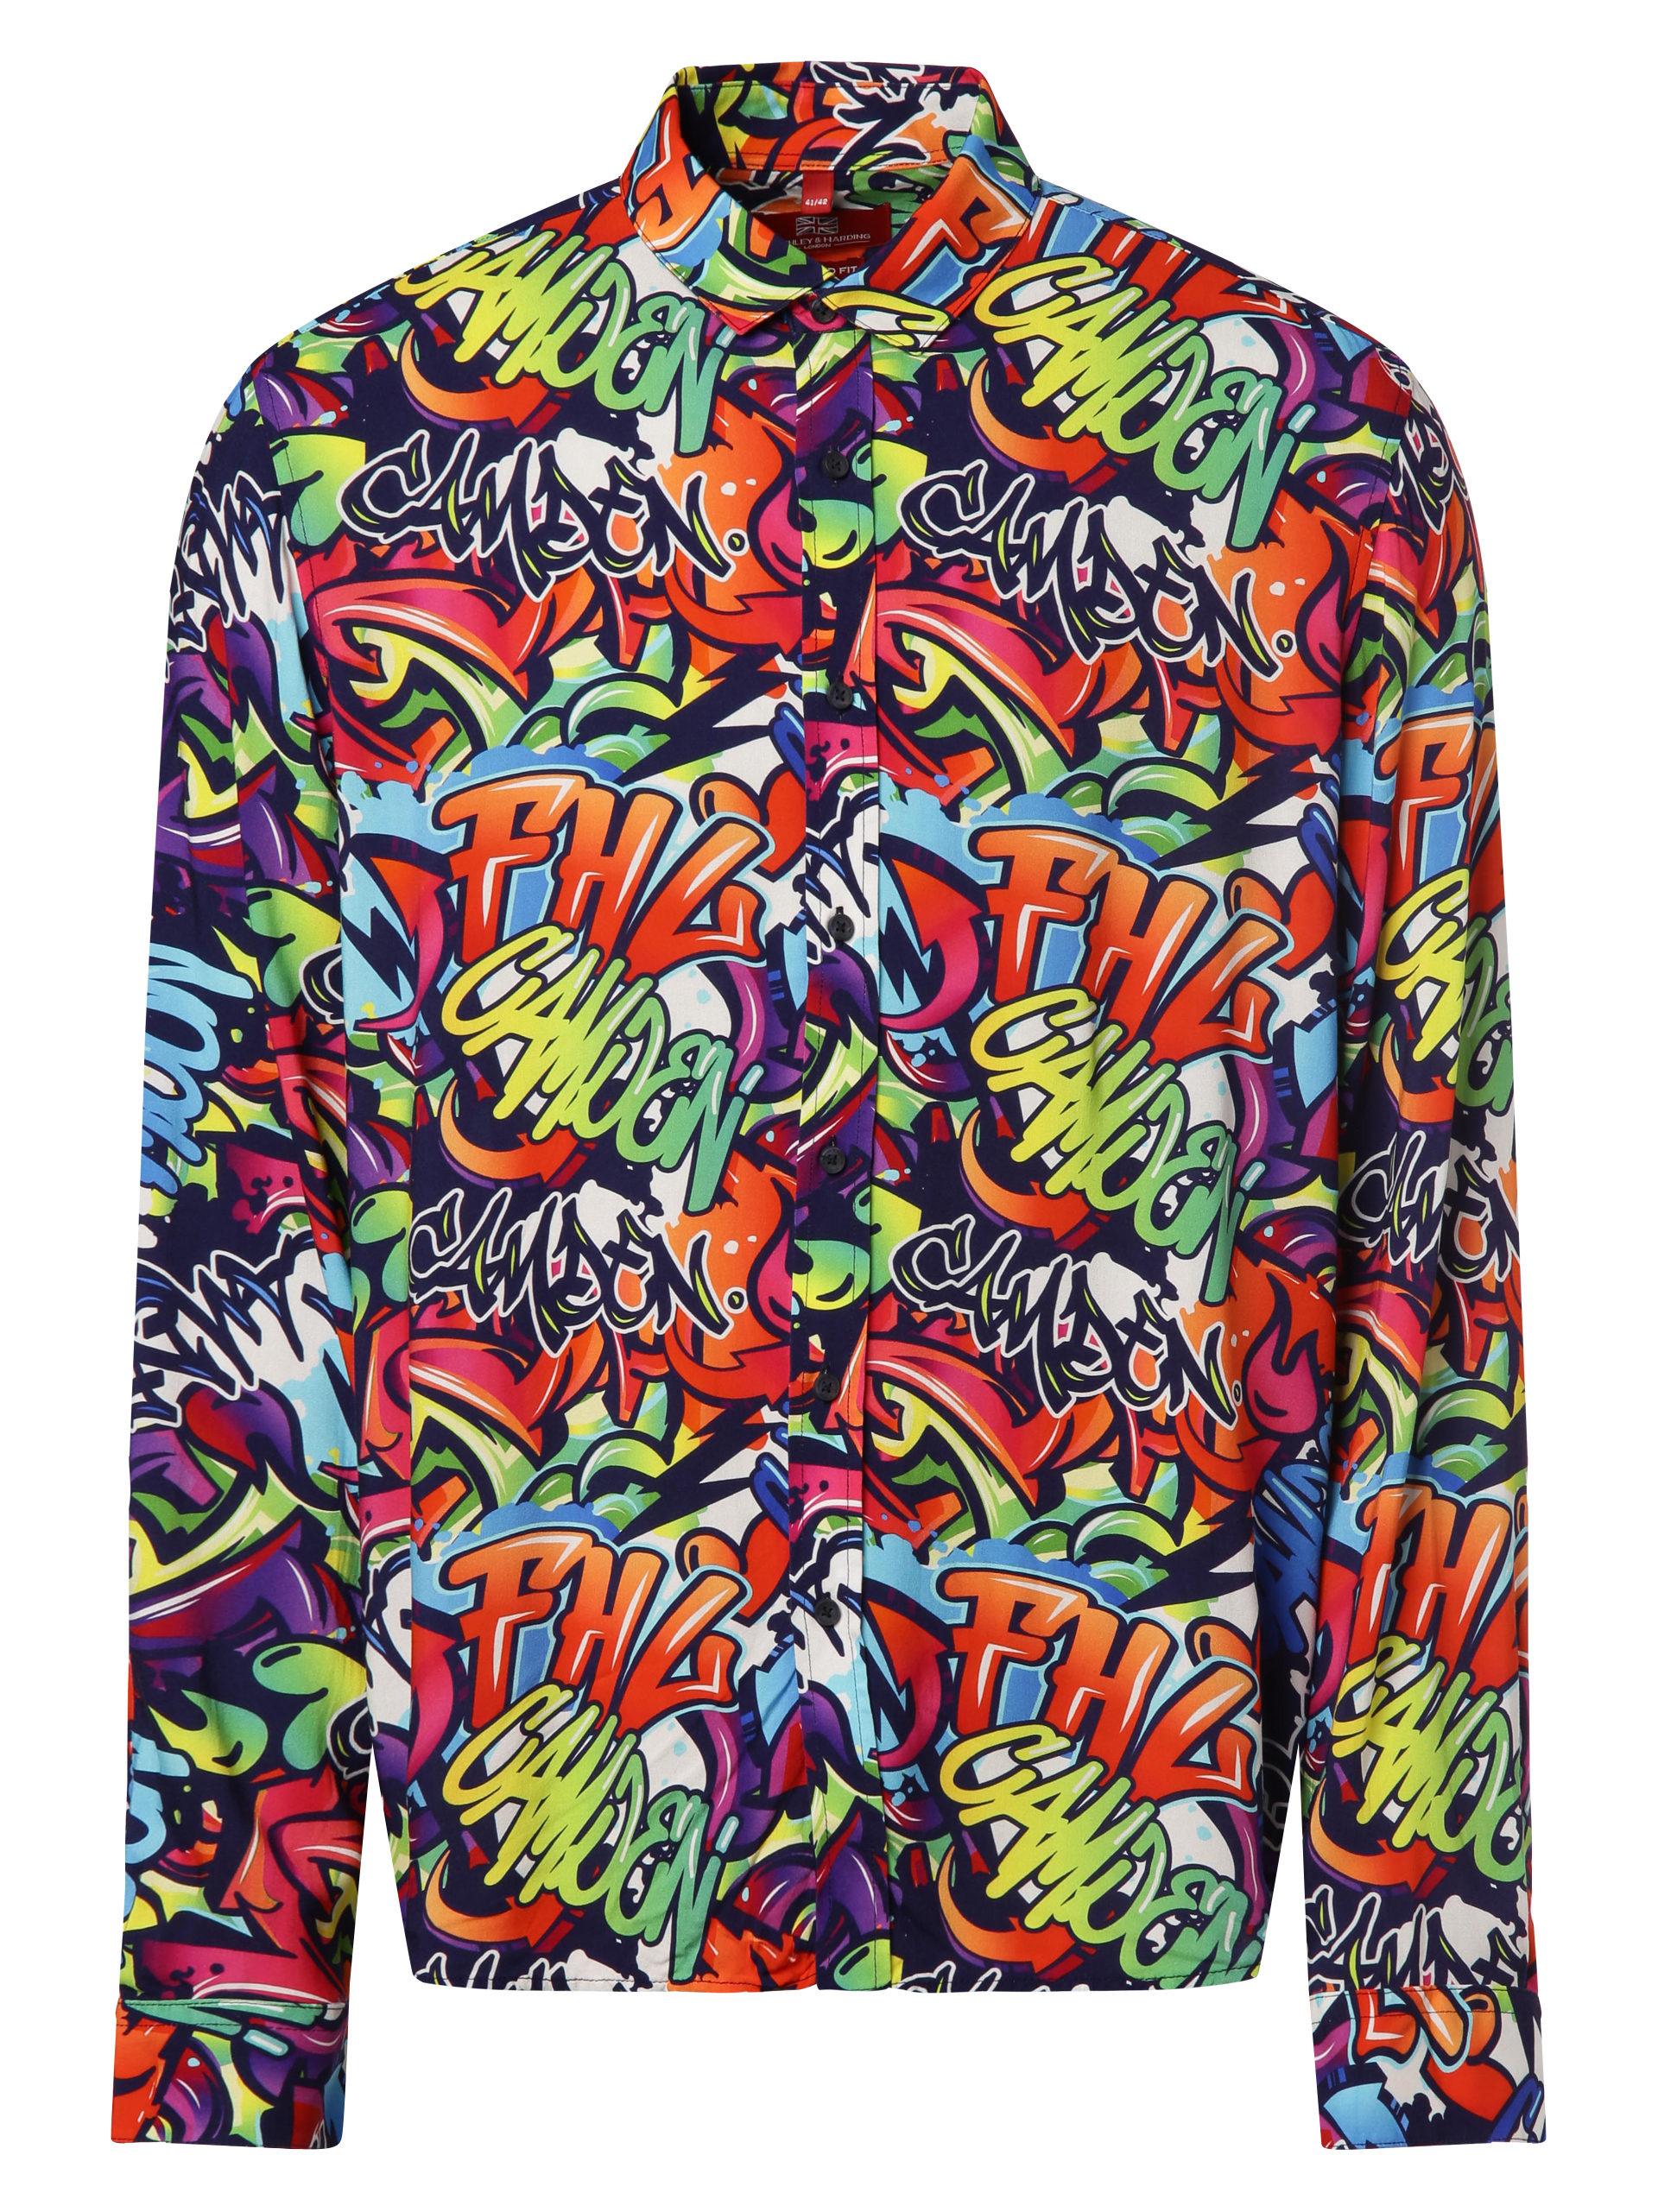 Рубашка Finshley & Harding London FLH Bryan, разноцветный